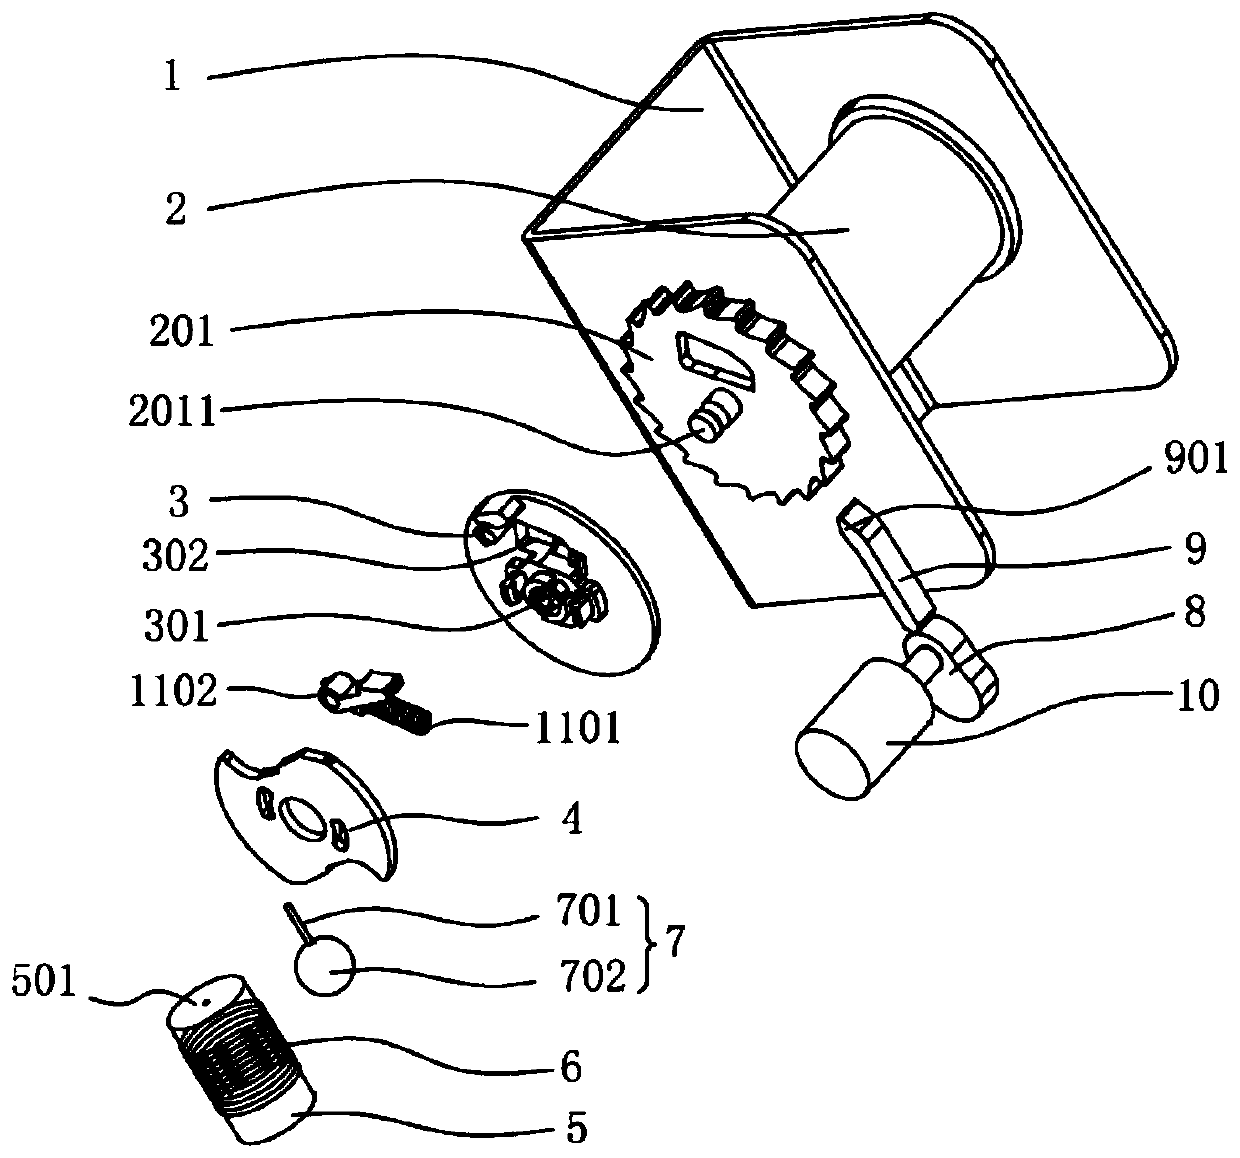 Car sensor lock device, belt sensor lock device and car seat belt lock sensor device